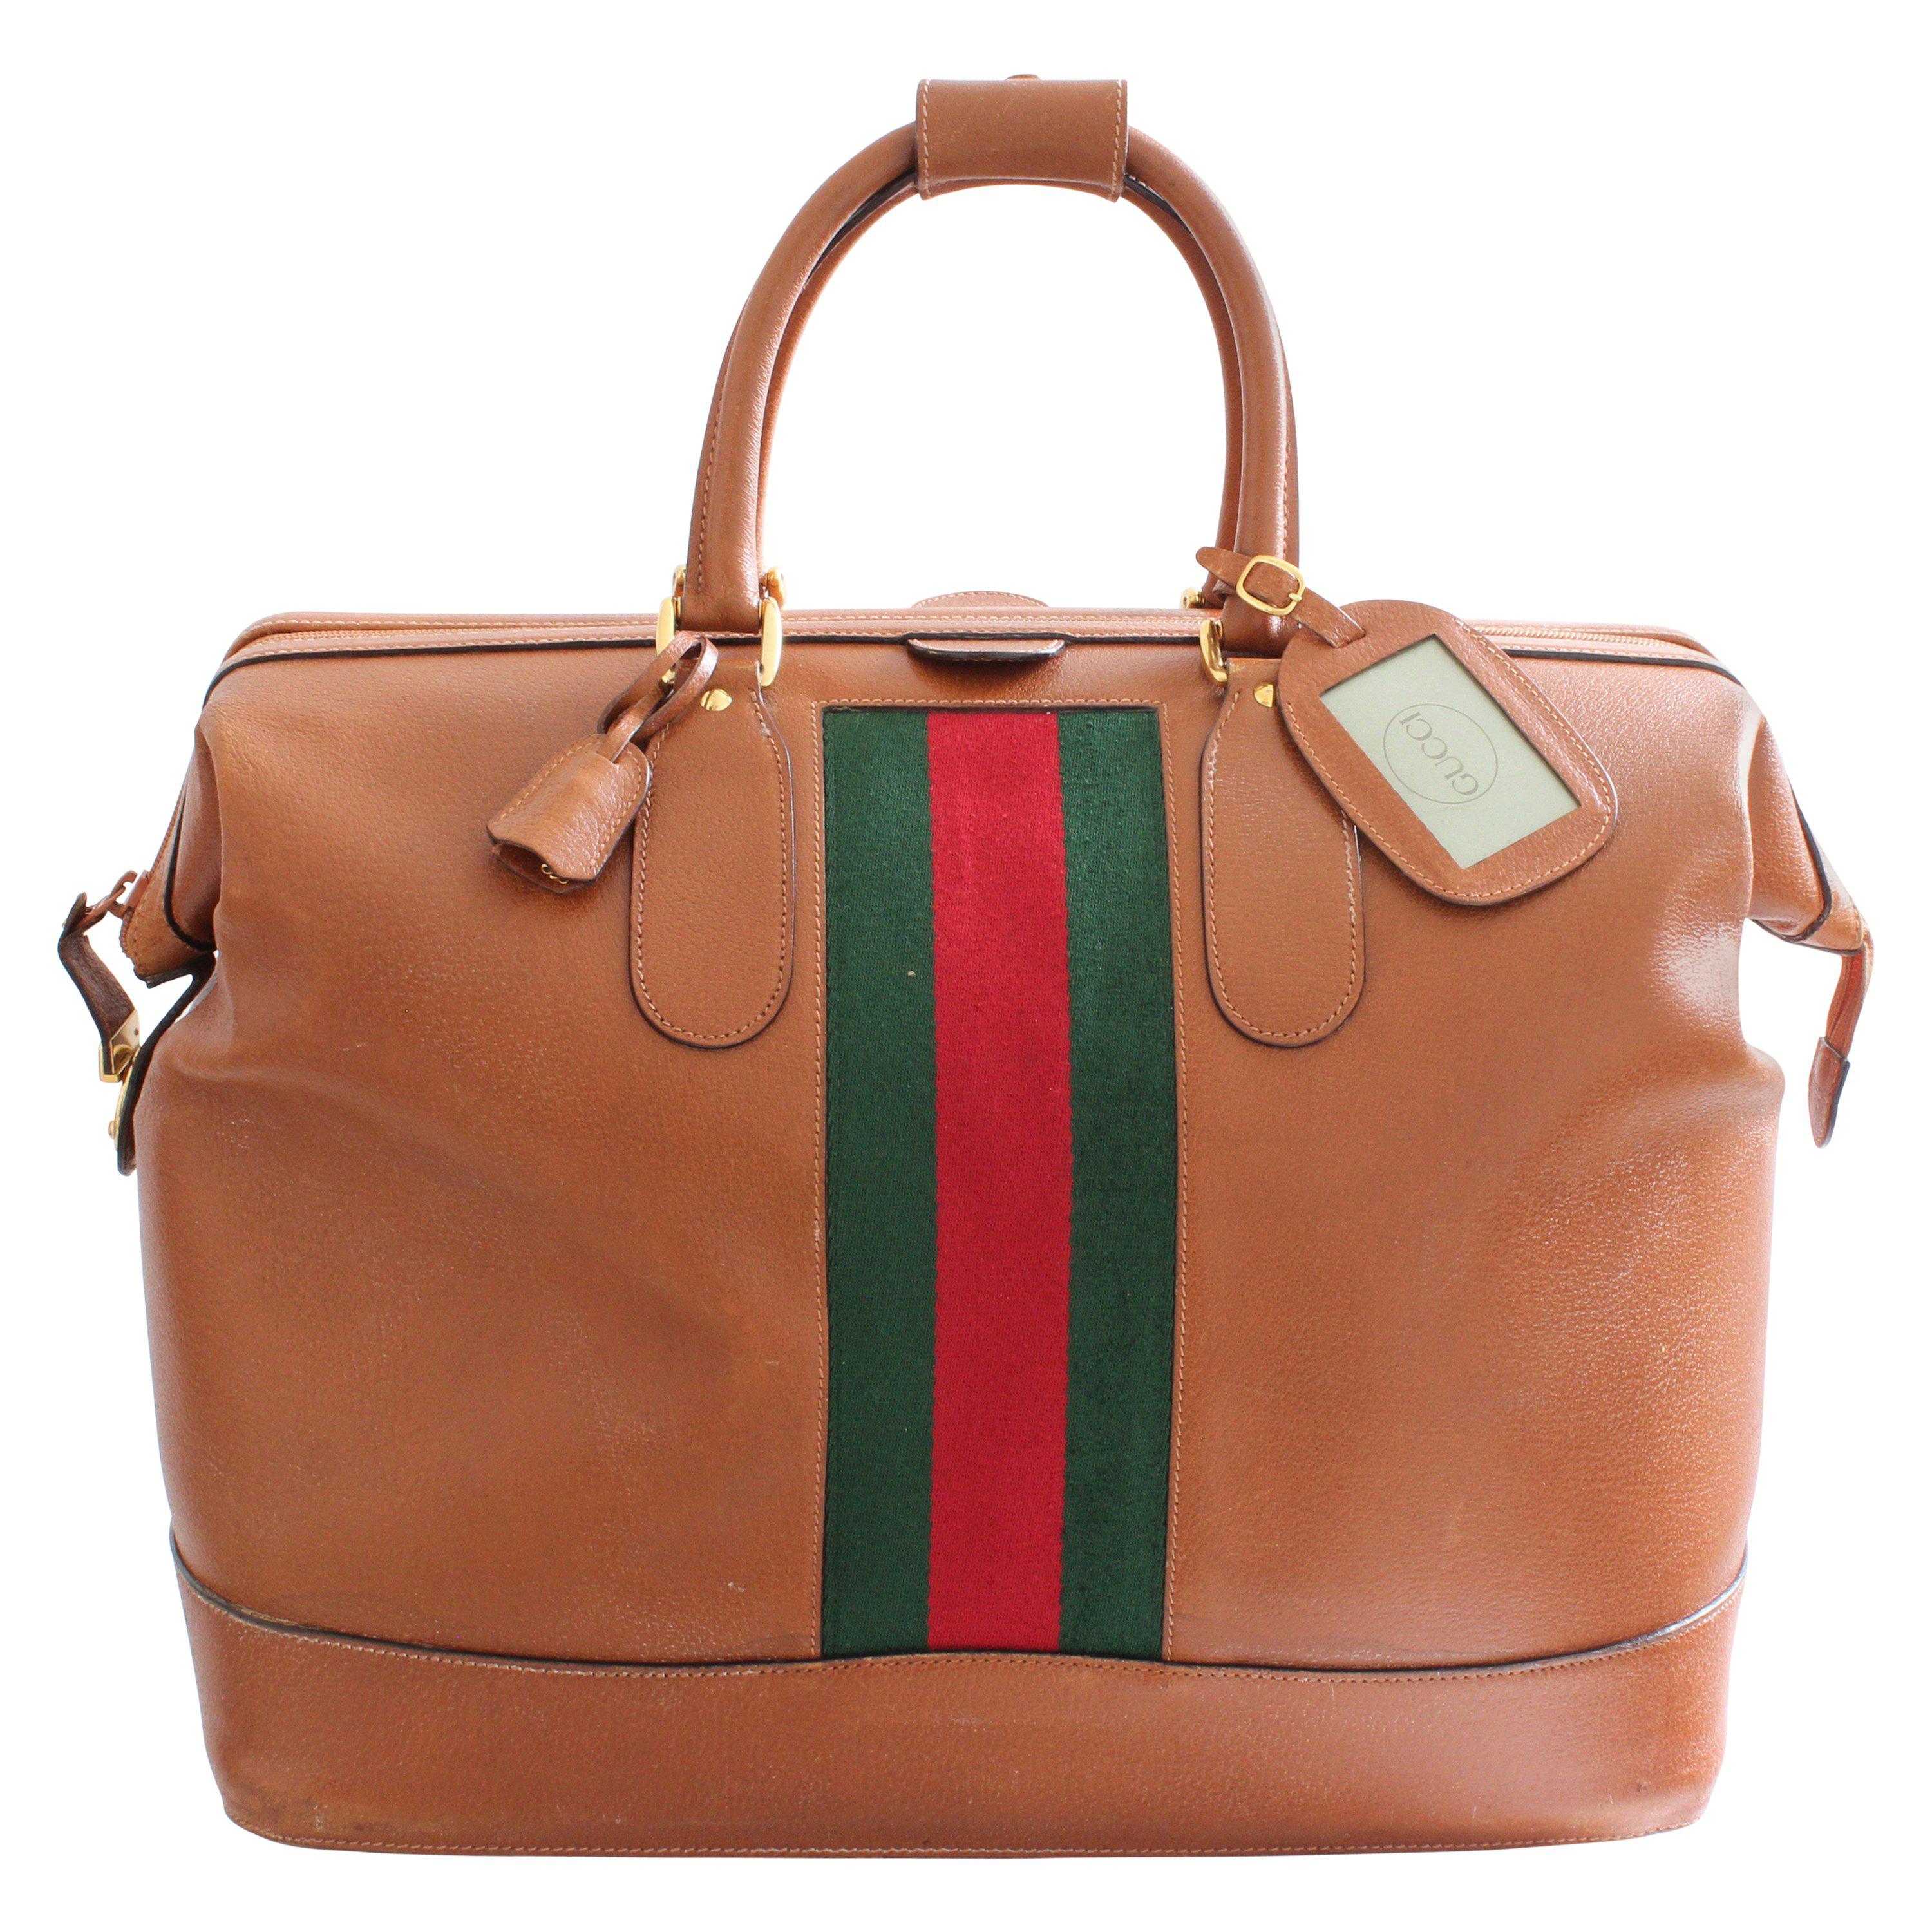 Rare Gucci Saddle Leather Doctors Bag Duffel 50cm Weekender Luggage Vintage 